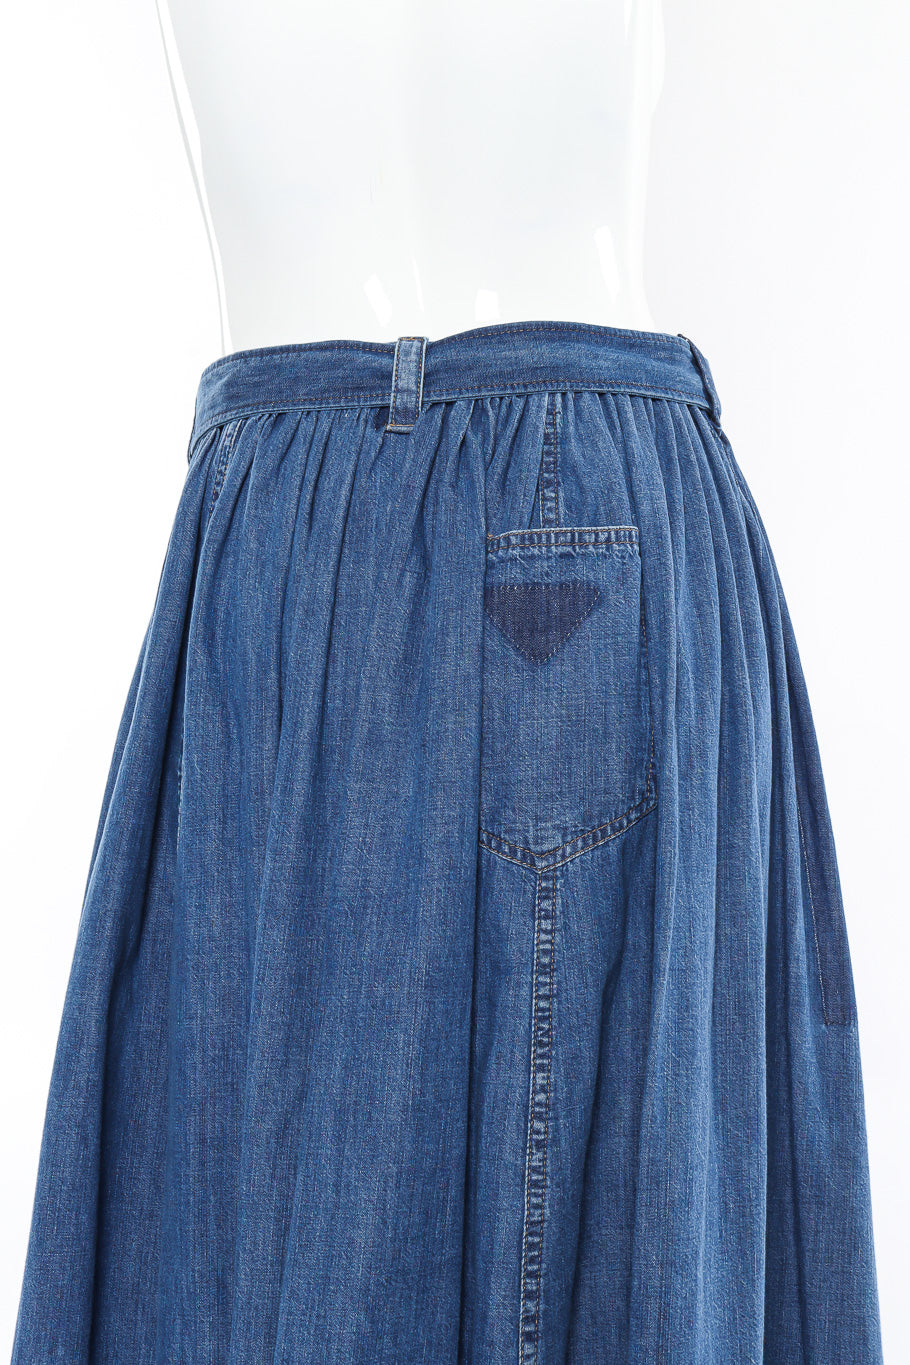 Prada denim peasant skirt back view on mannequin @recessla